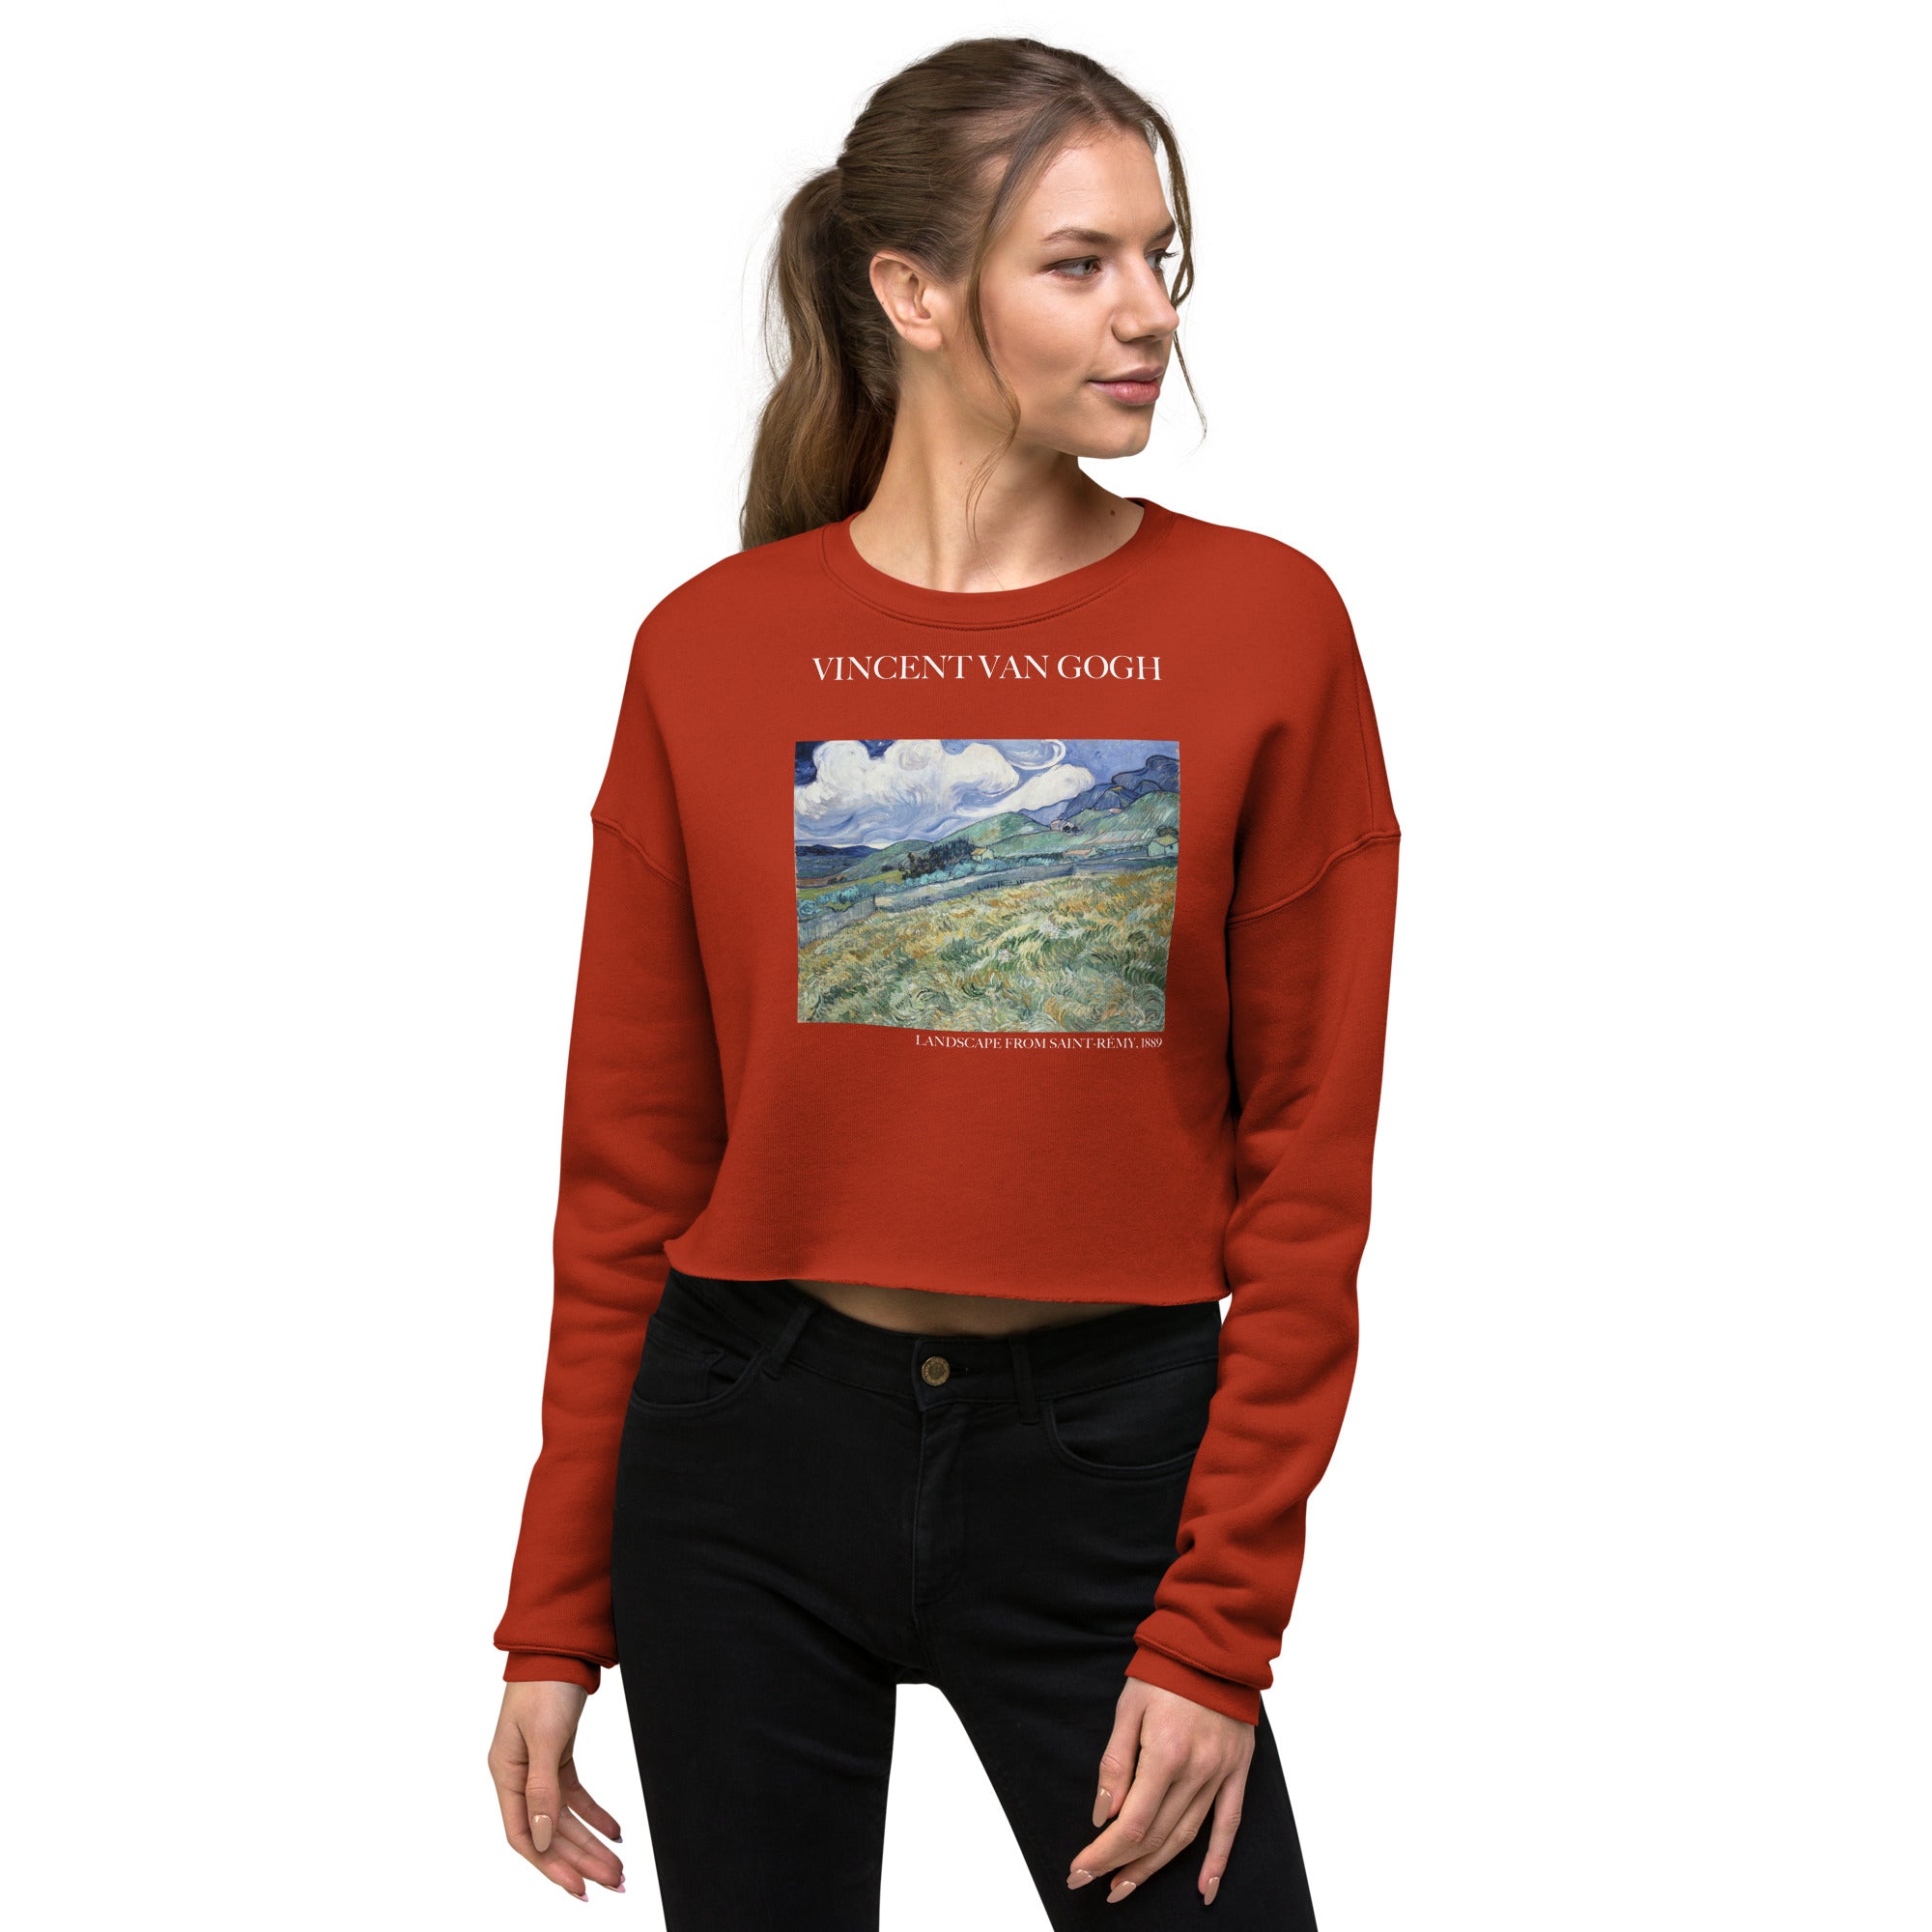 Vincent van Gogh „Landschaft von Saint-Rémy“, berühmtes Gemälde, kurzes Sweatshirt | Premium Art, kurzes Sweatshirt